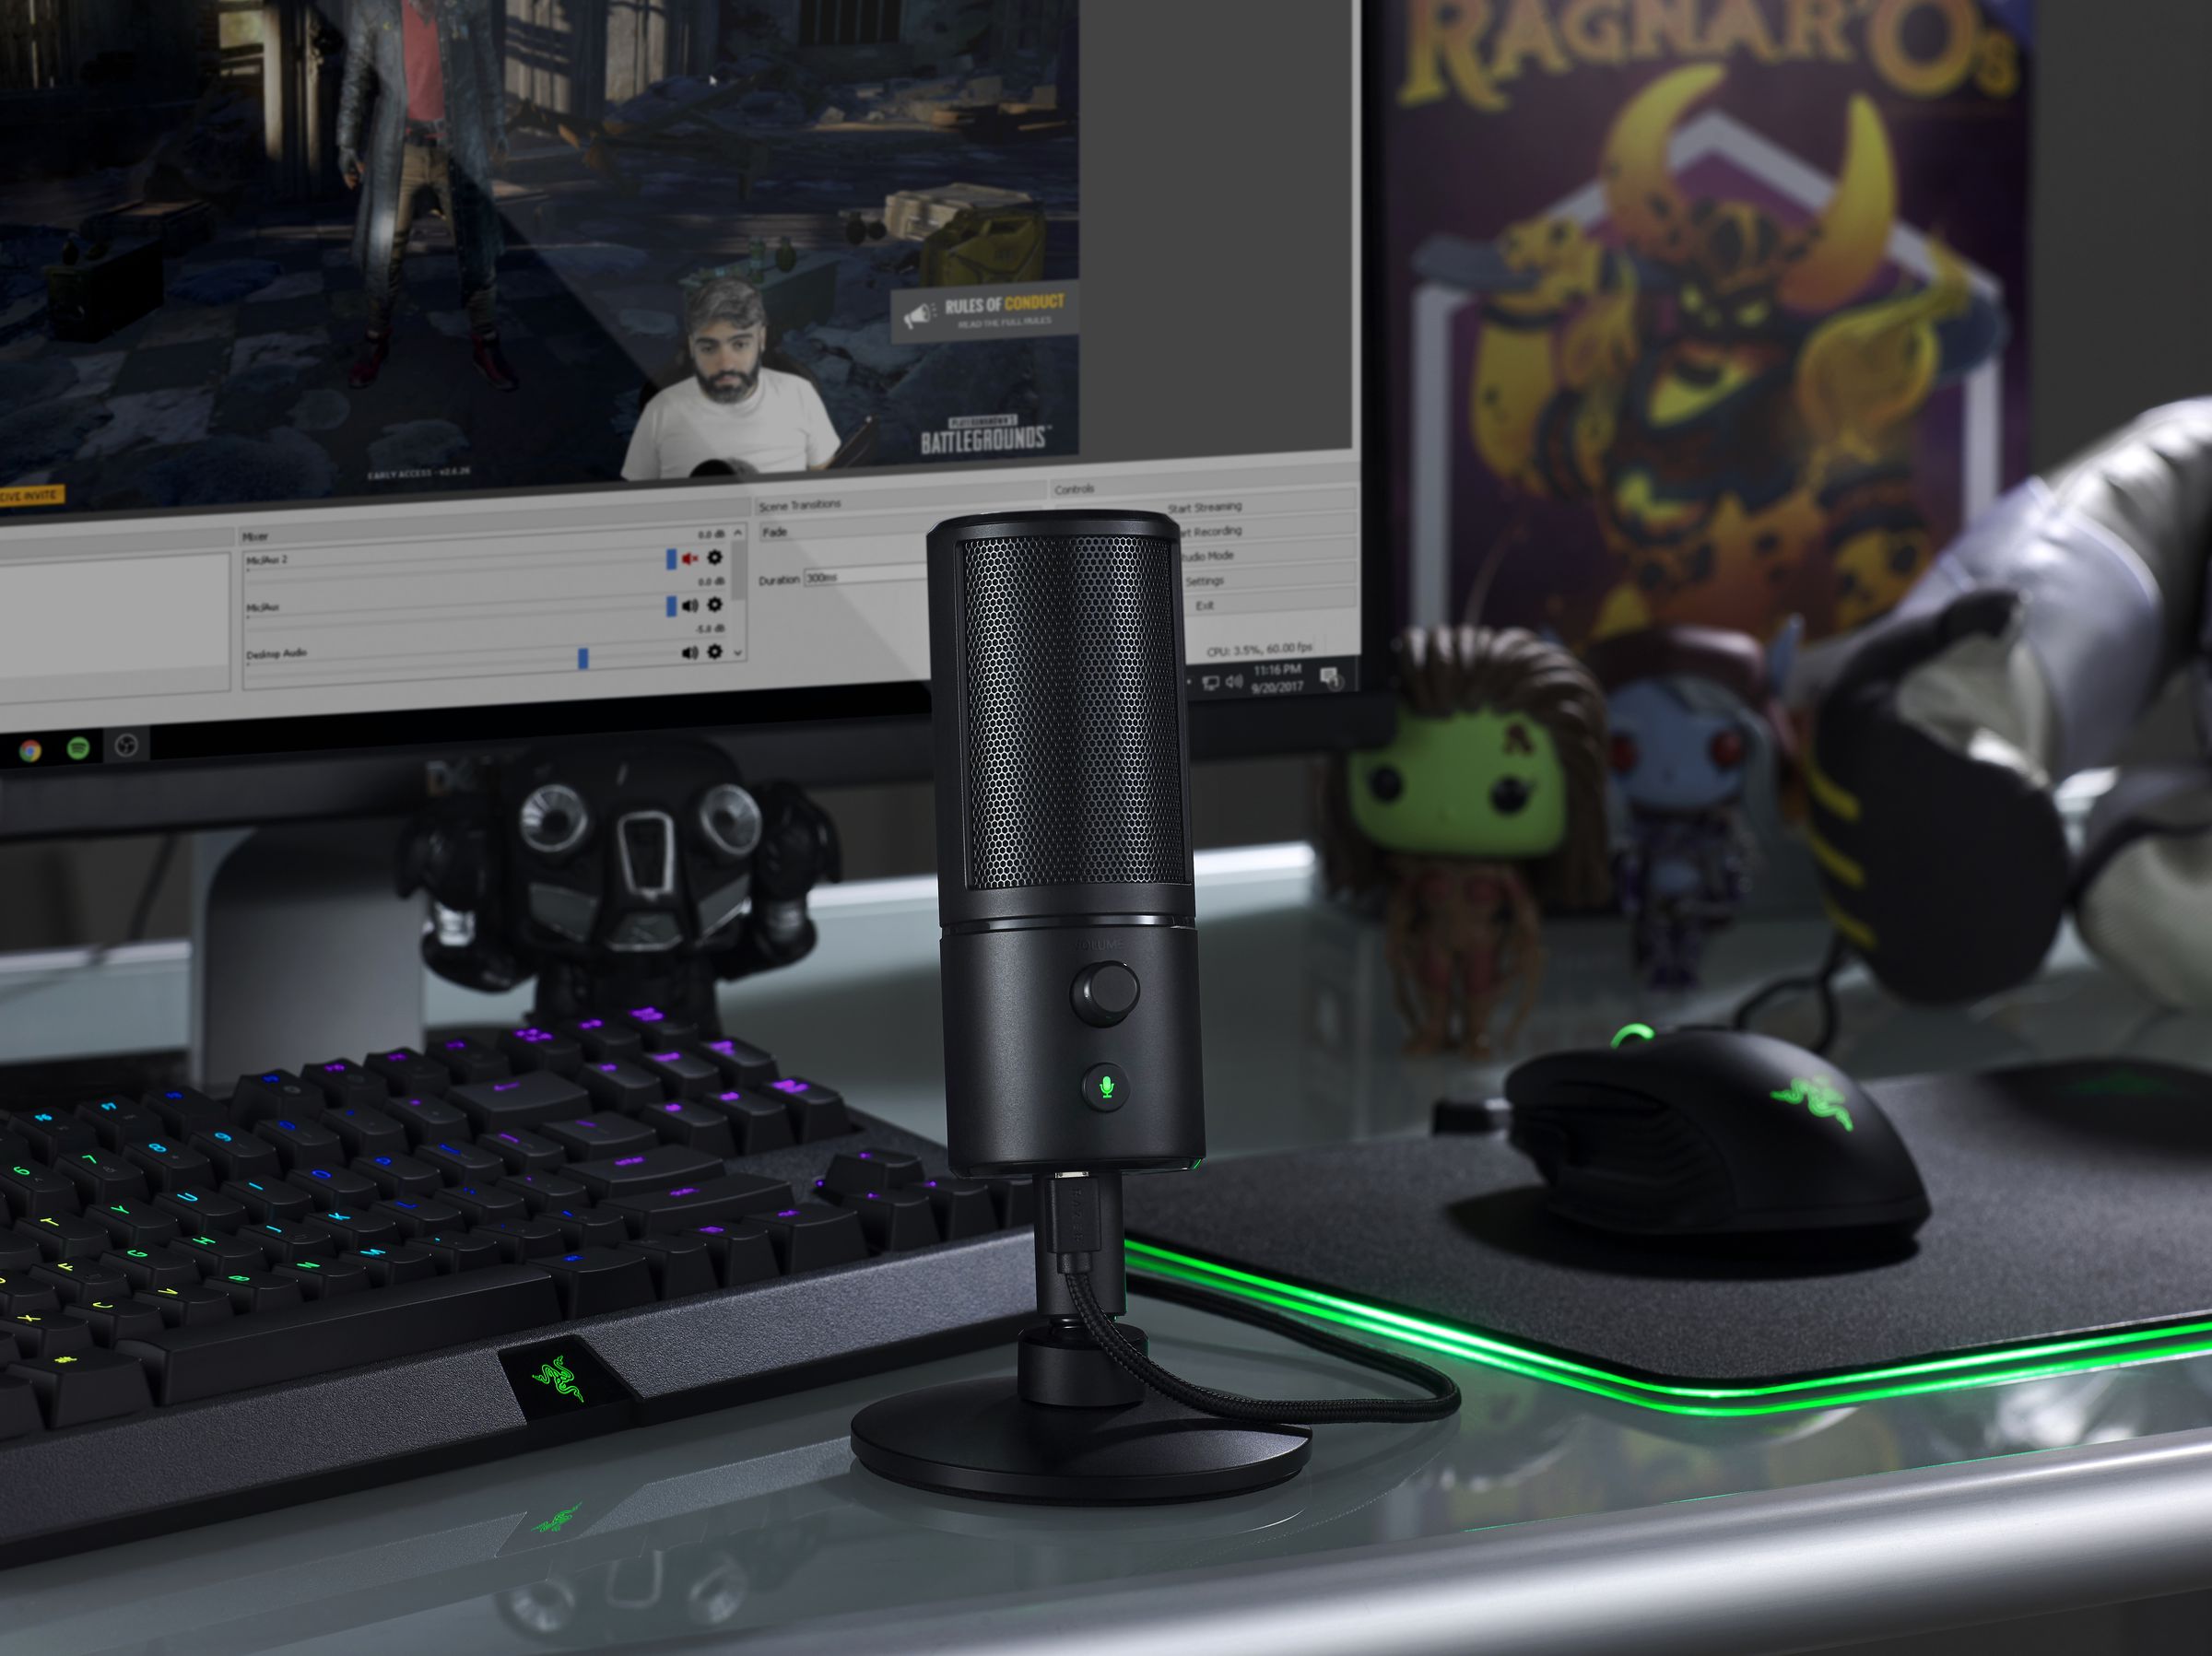 The Razer Seiren X microphone, beside a Razer keyboard and mouse.